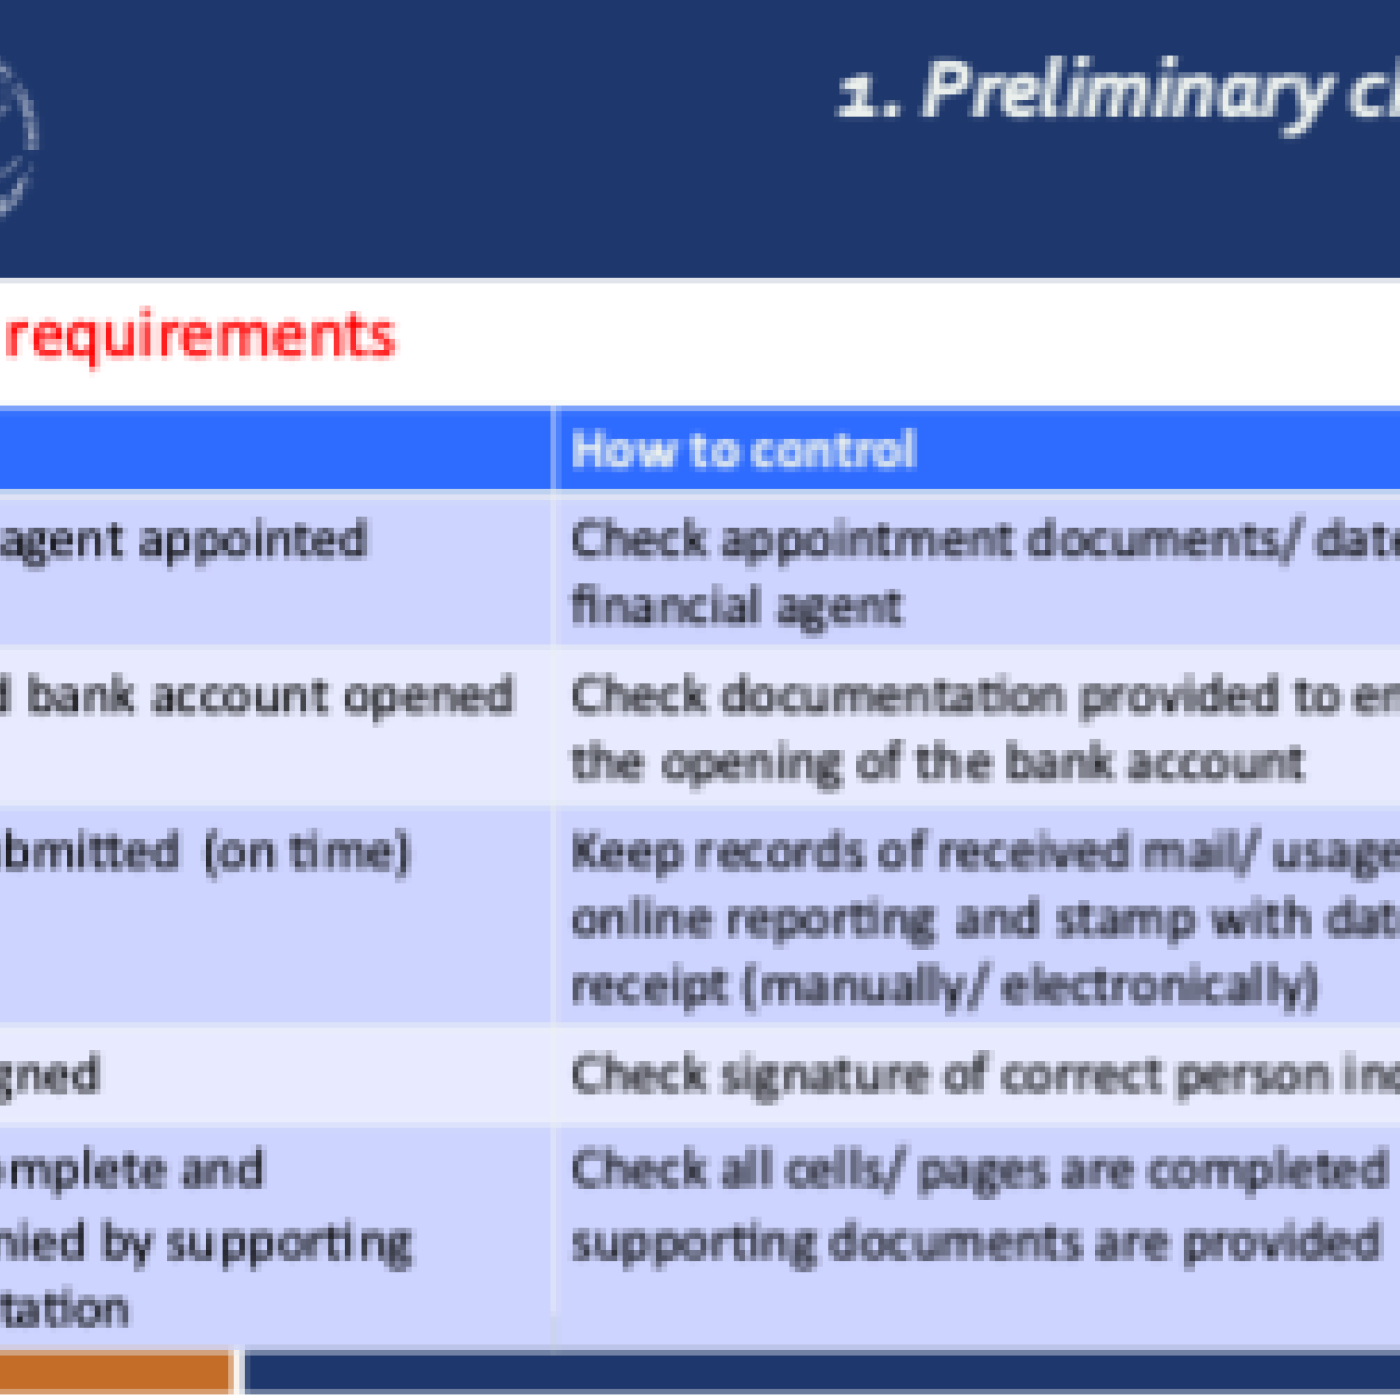 Preliminary checks (formal requirements)